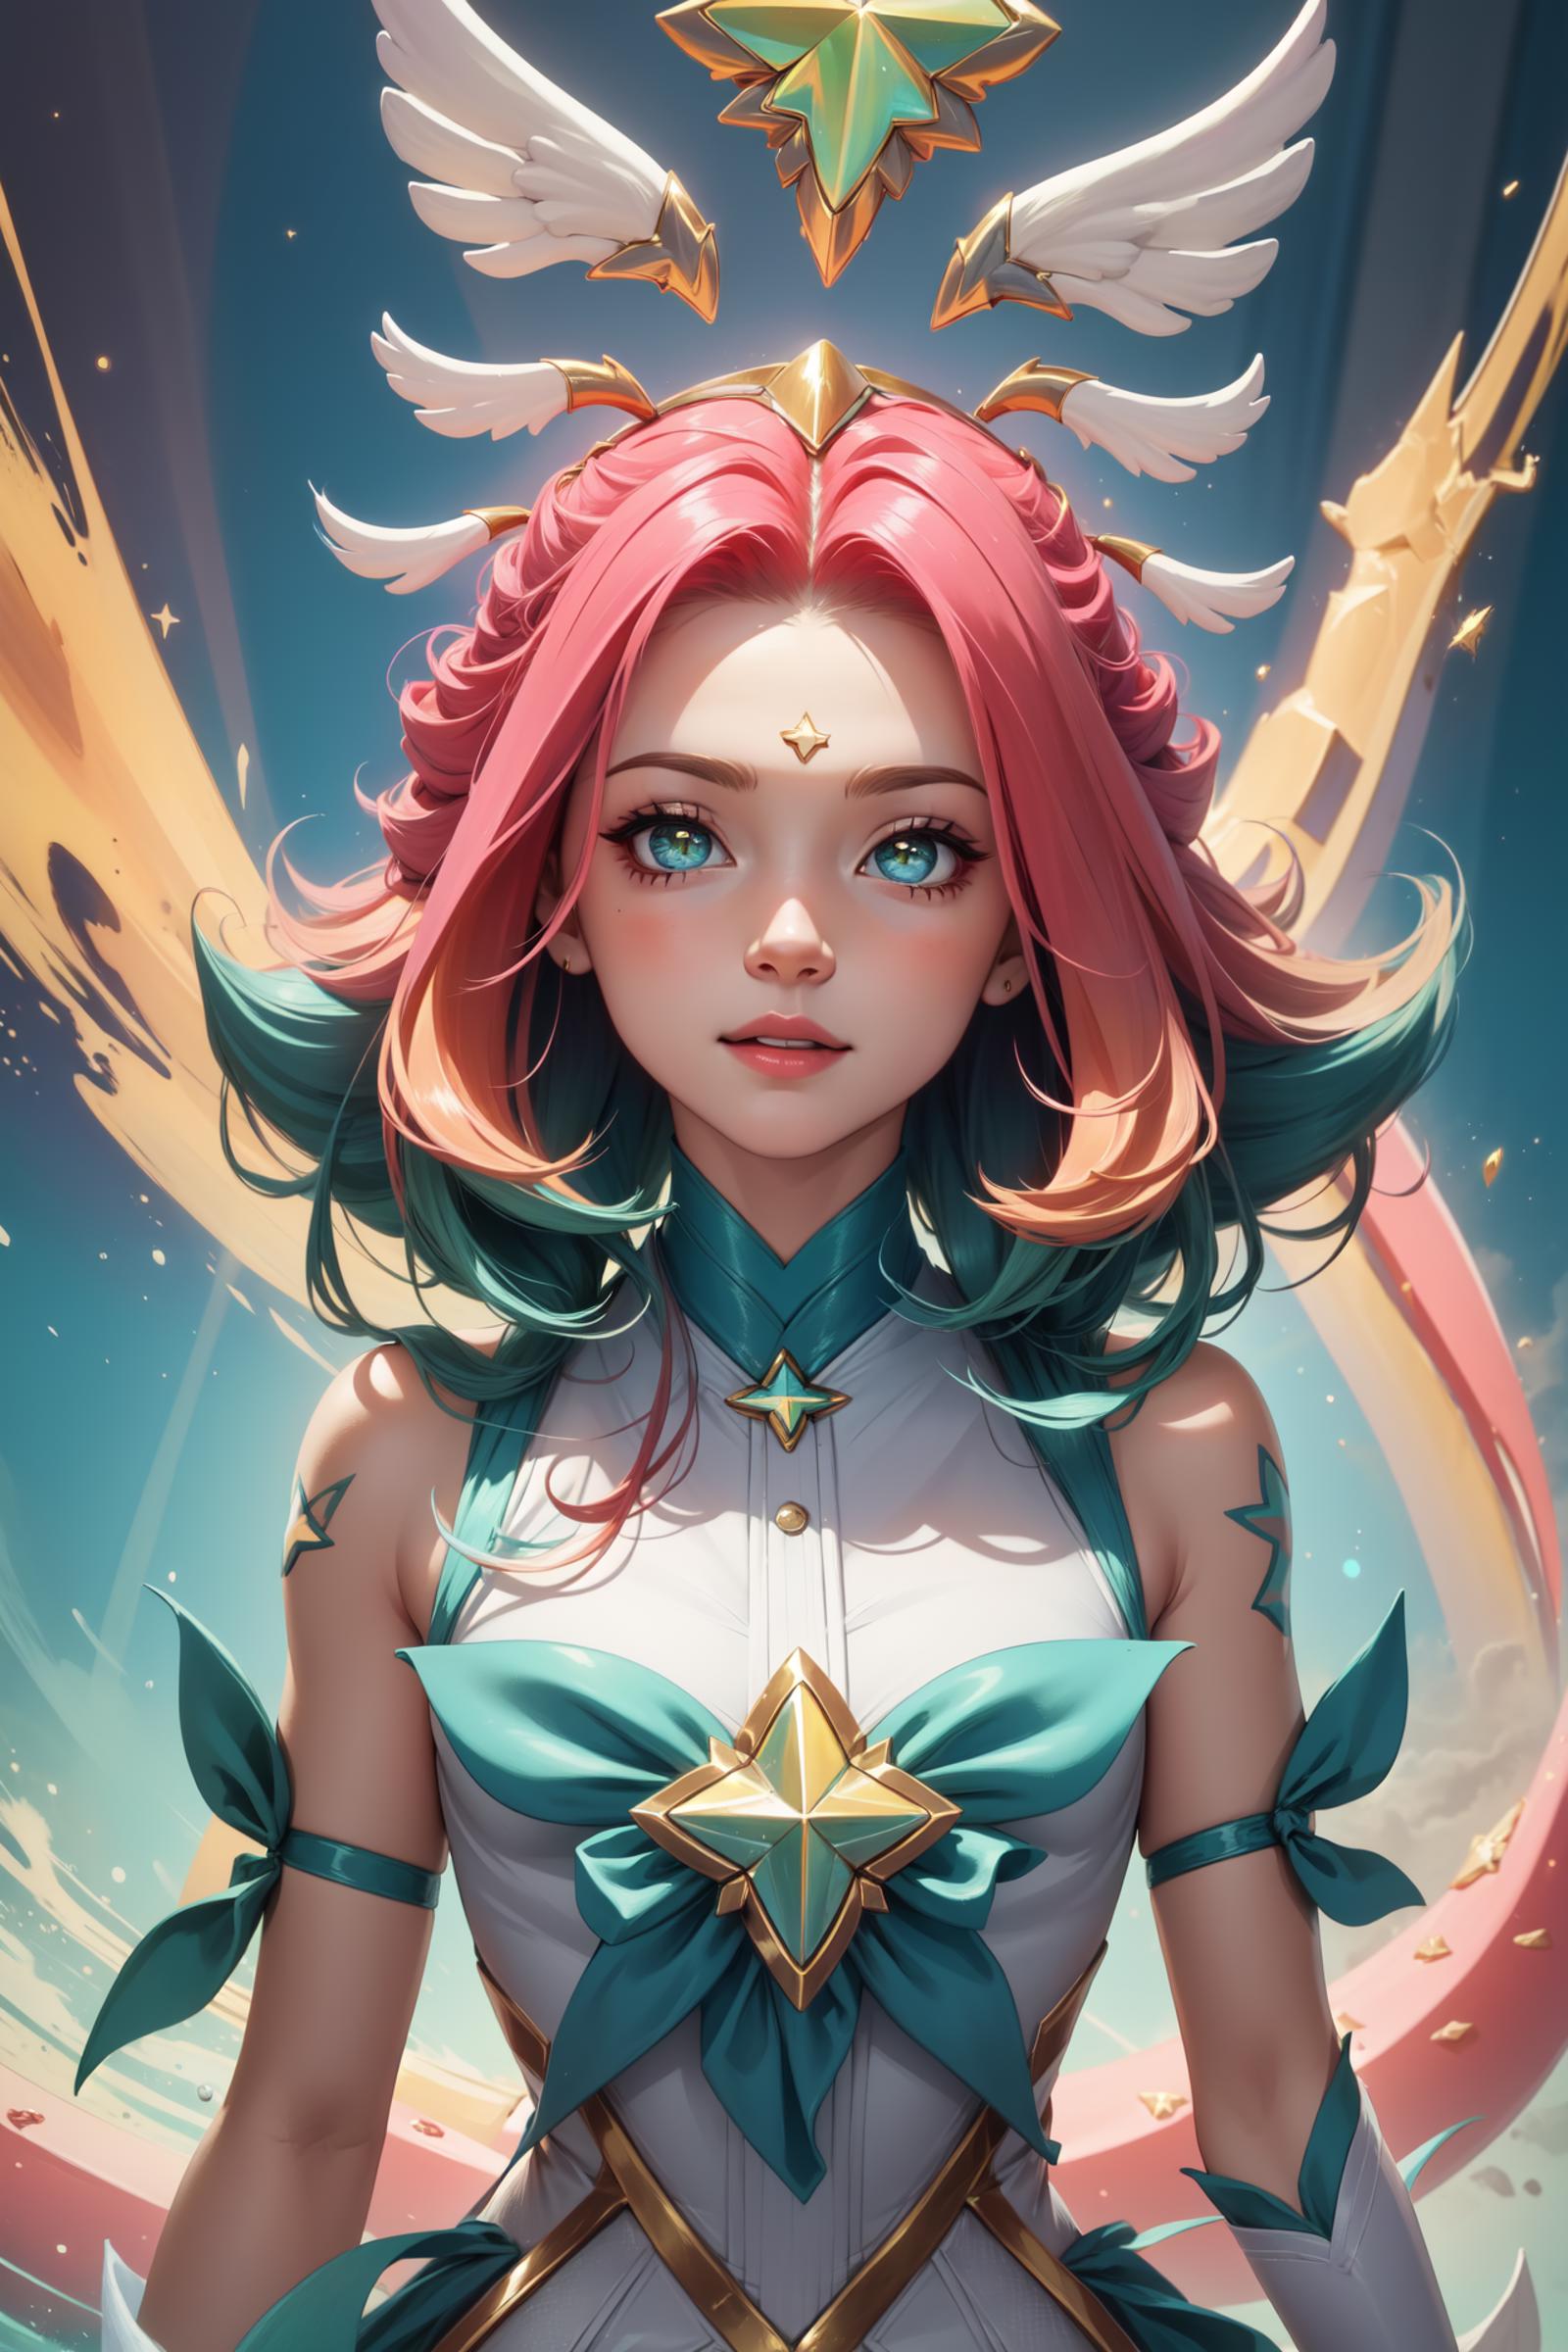 Star Guardian Neeko | League of Legends image by AhriMain